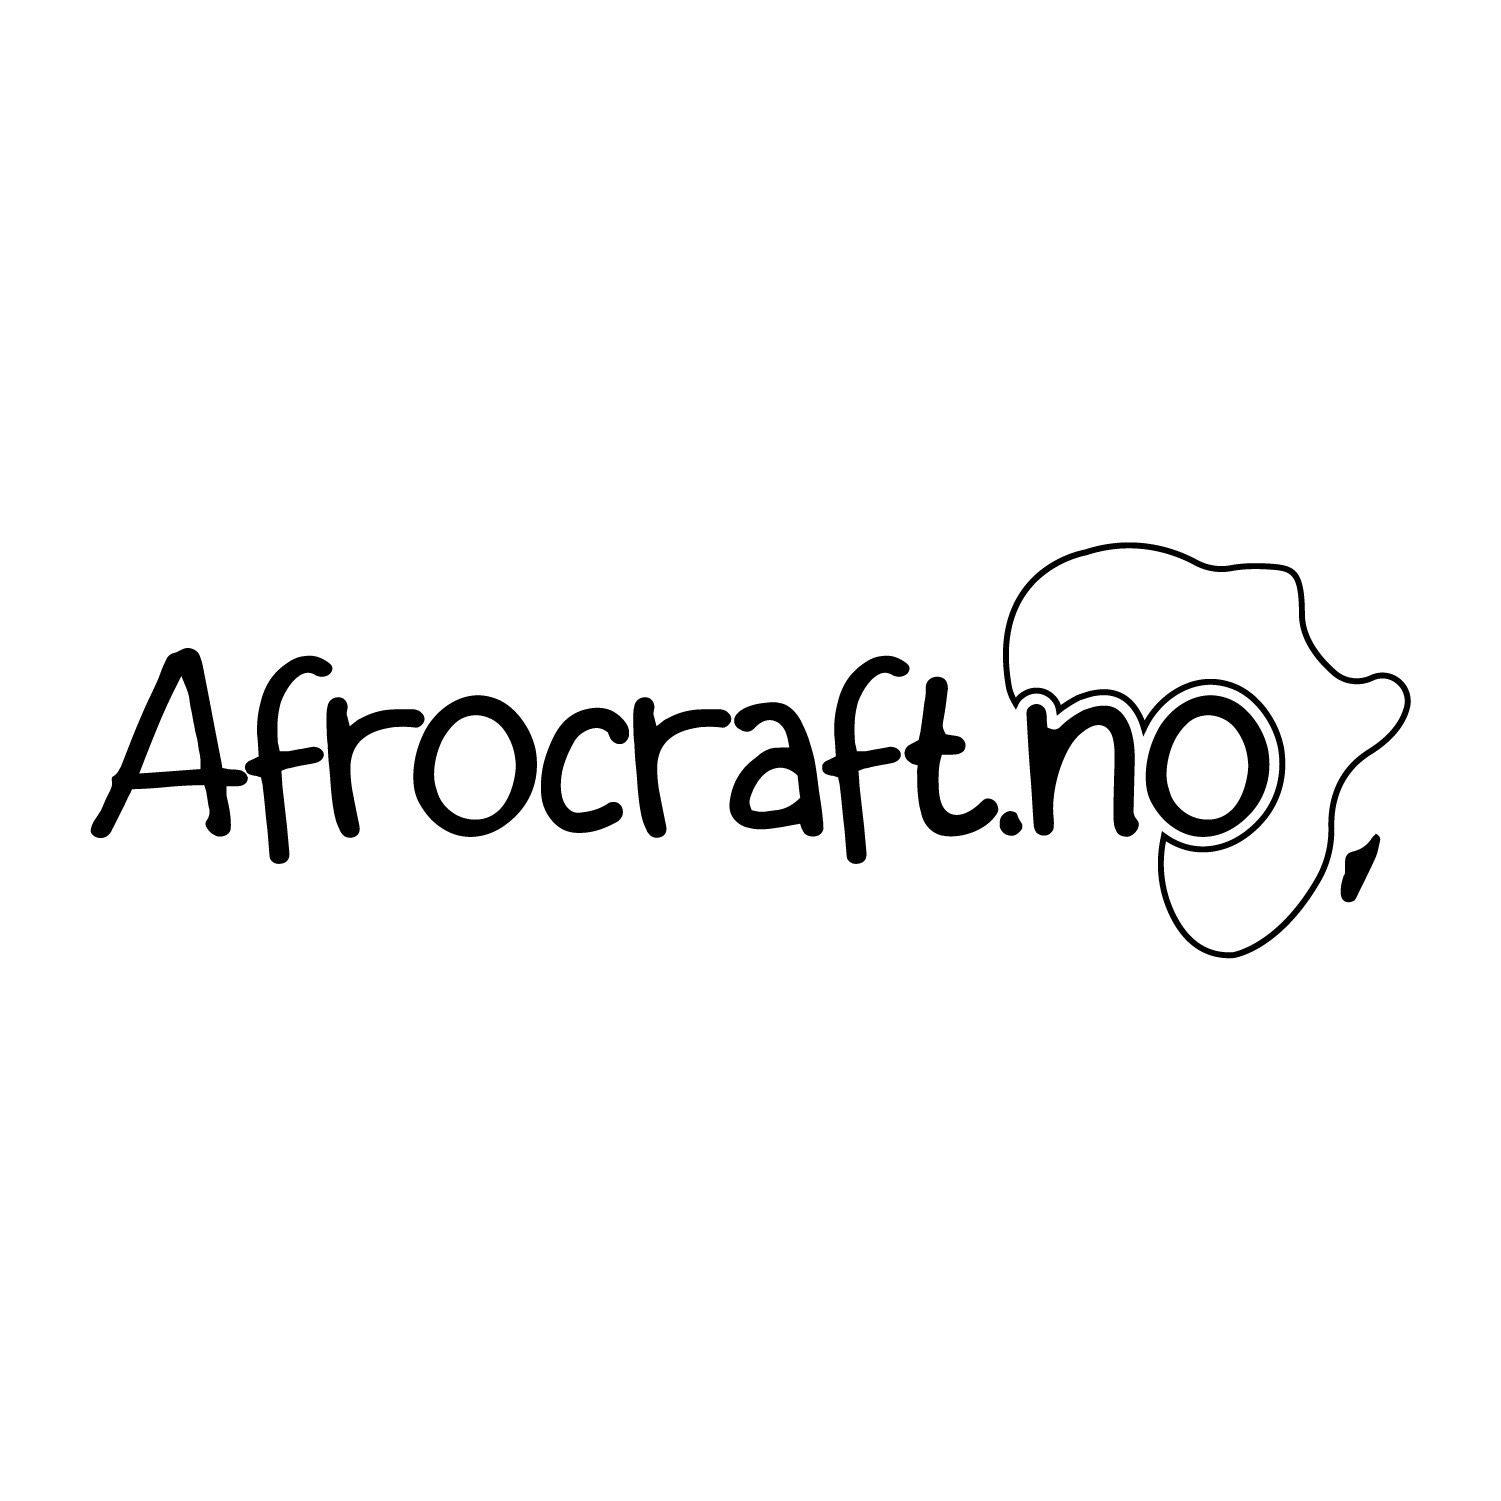 Afrocraft.no